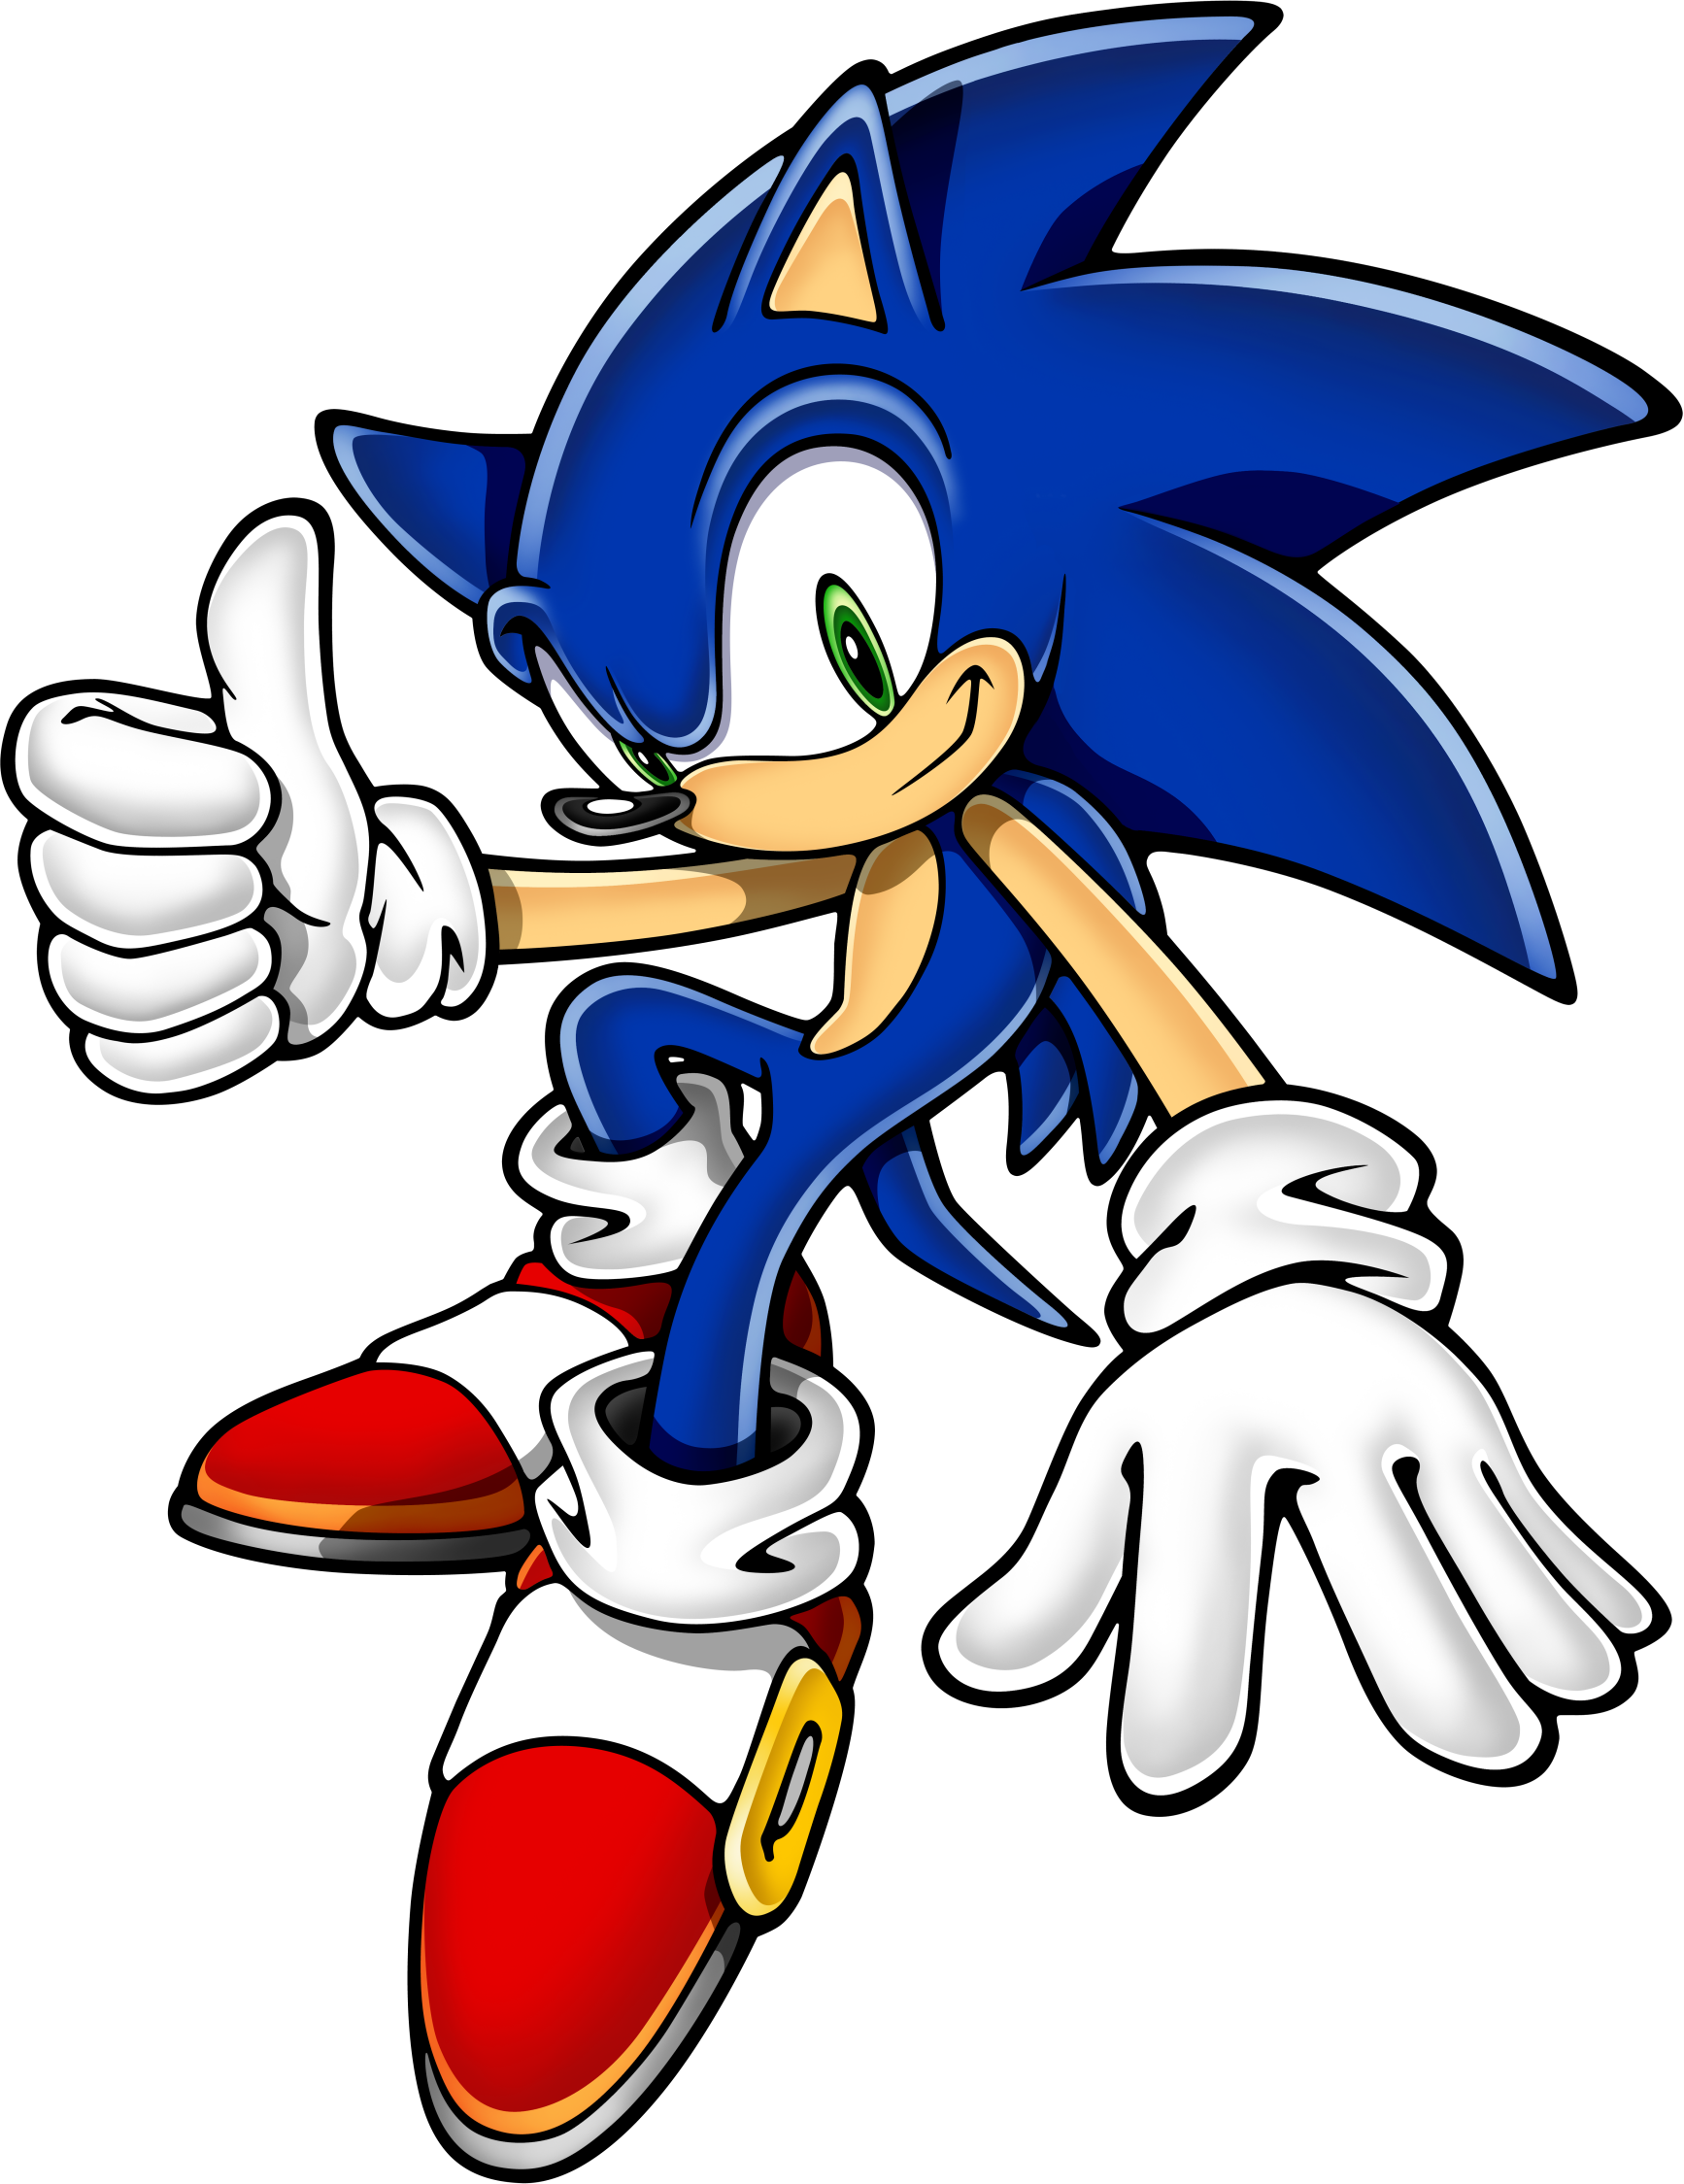 Sonic Art Assets Dvd - Sonic The Hedgehog (1734x2249)